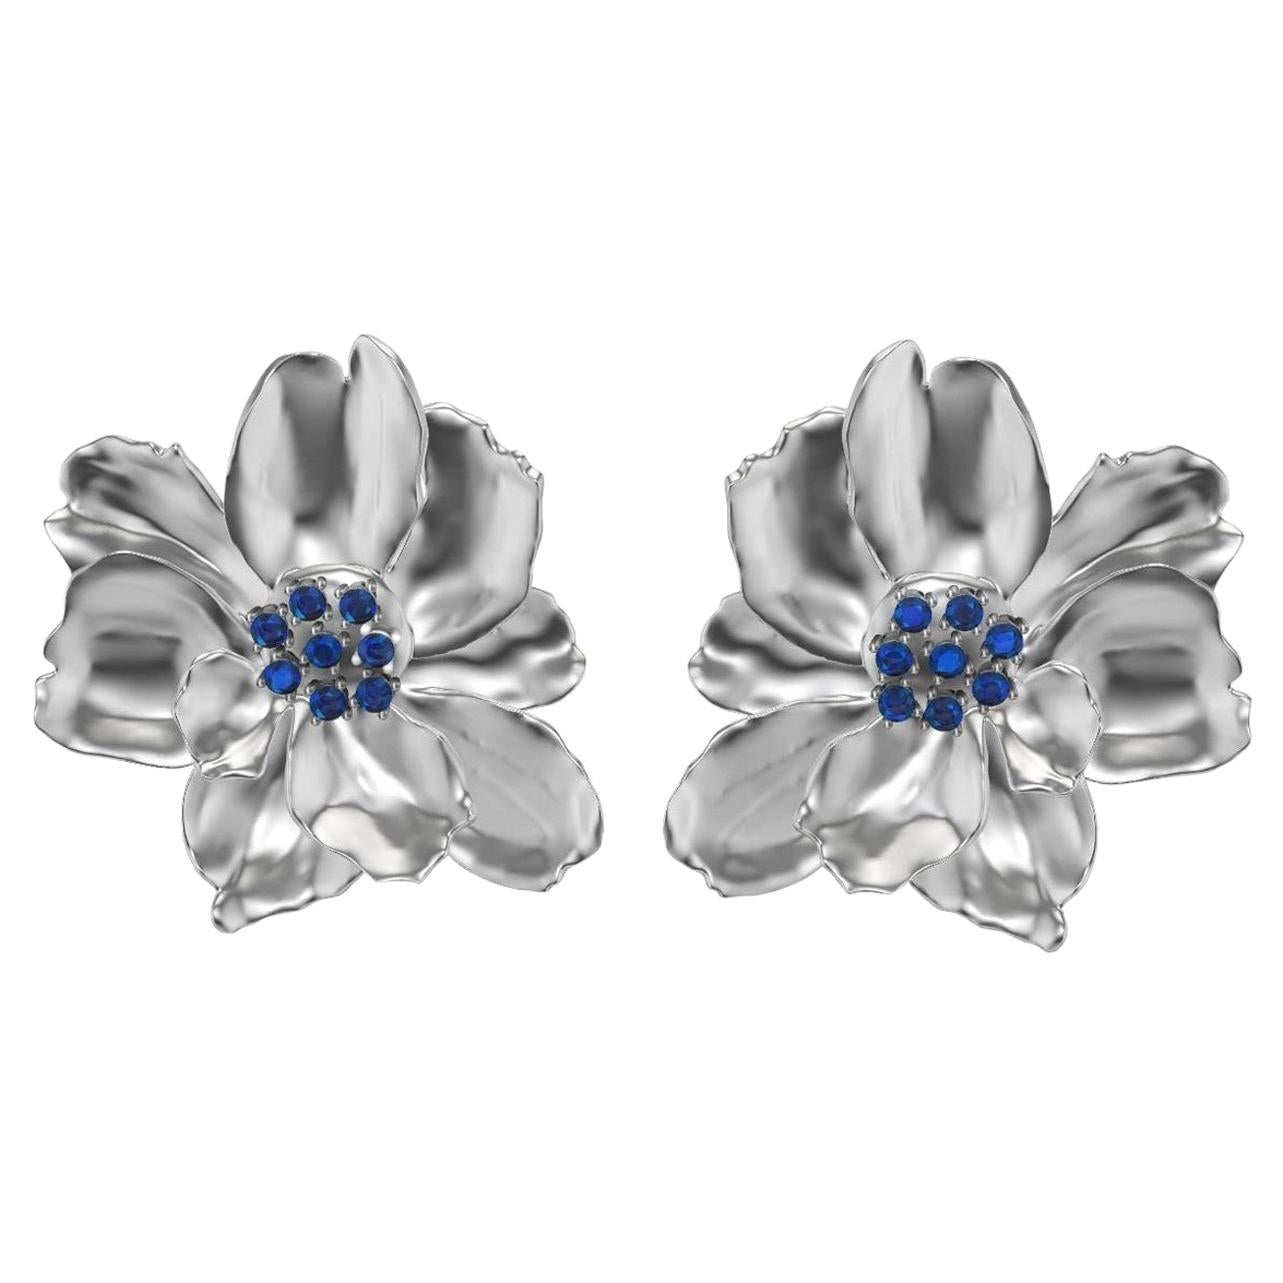 18 Karat White Gold Wild Flower Earrings with Sapphires